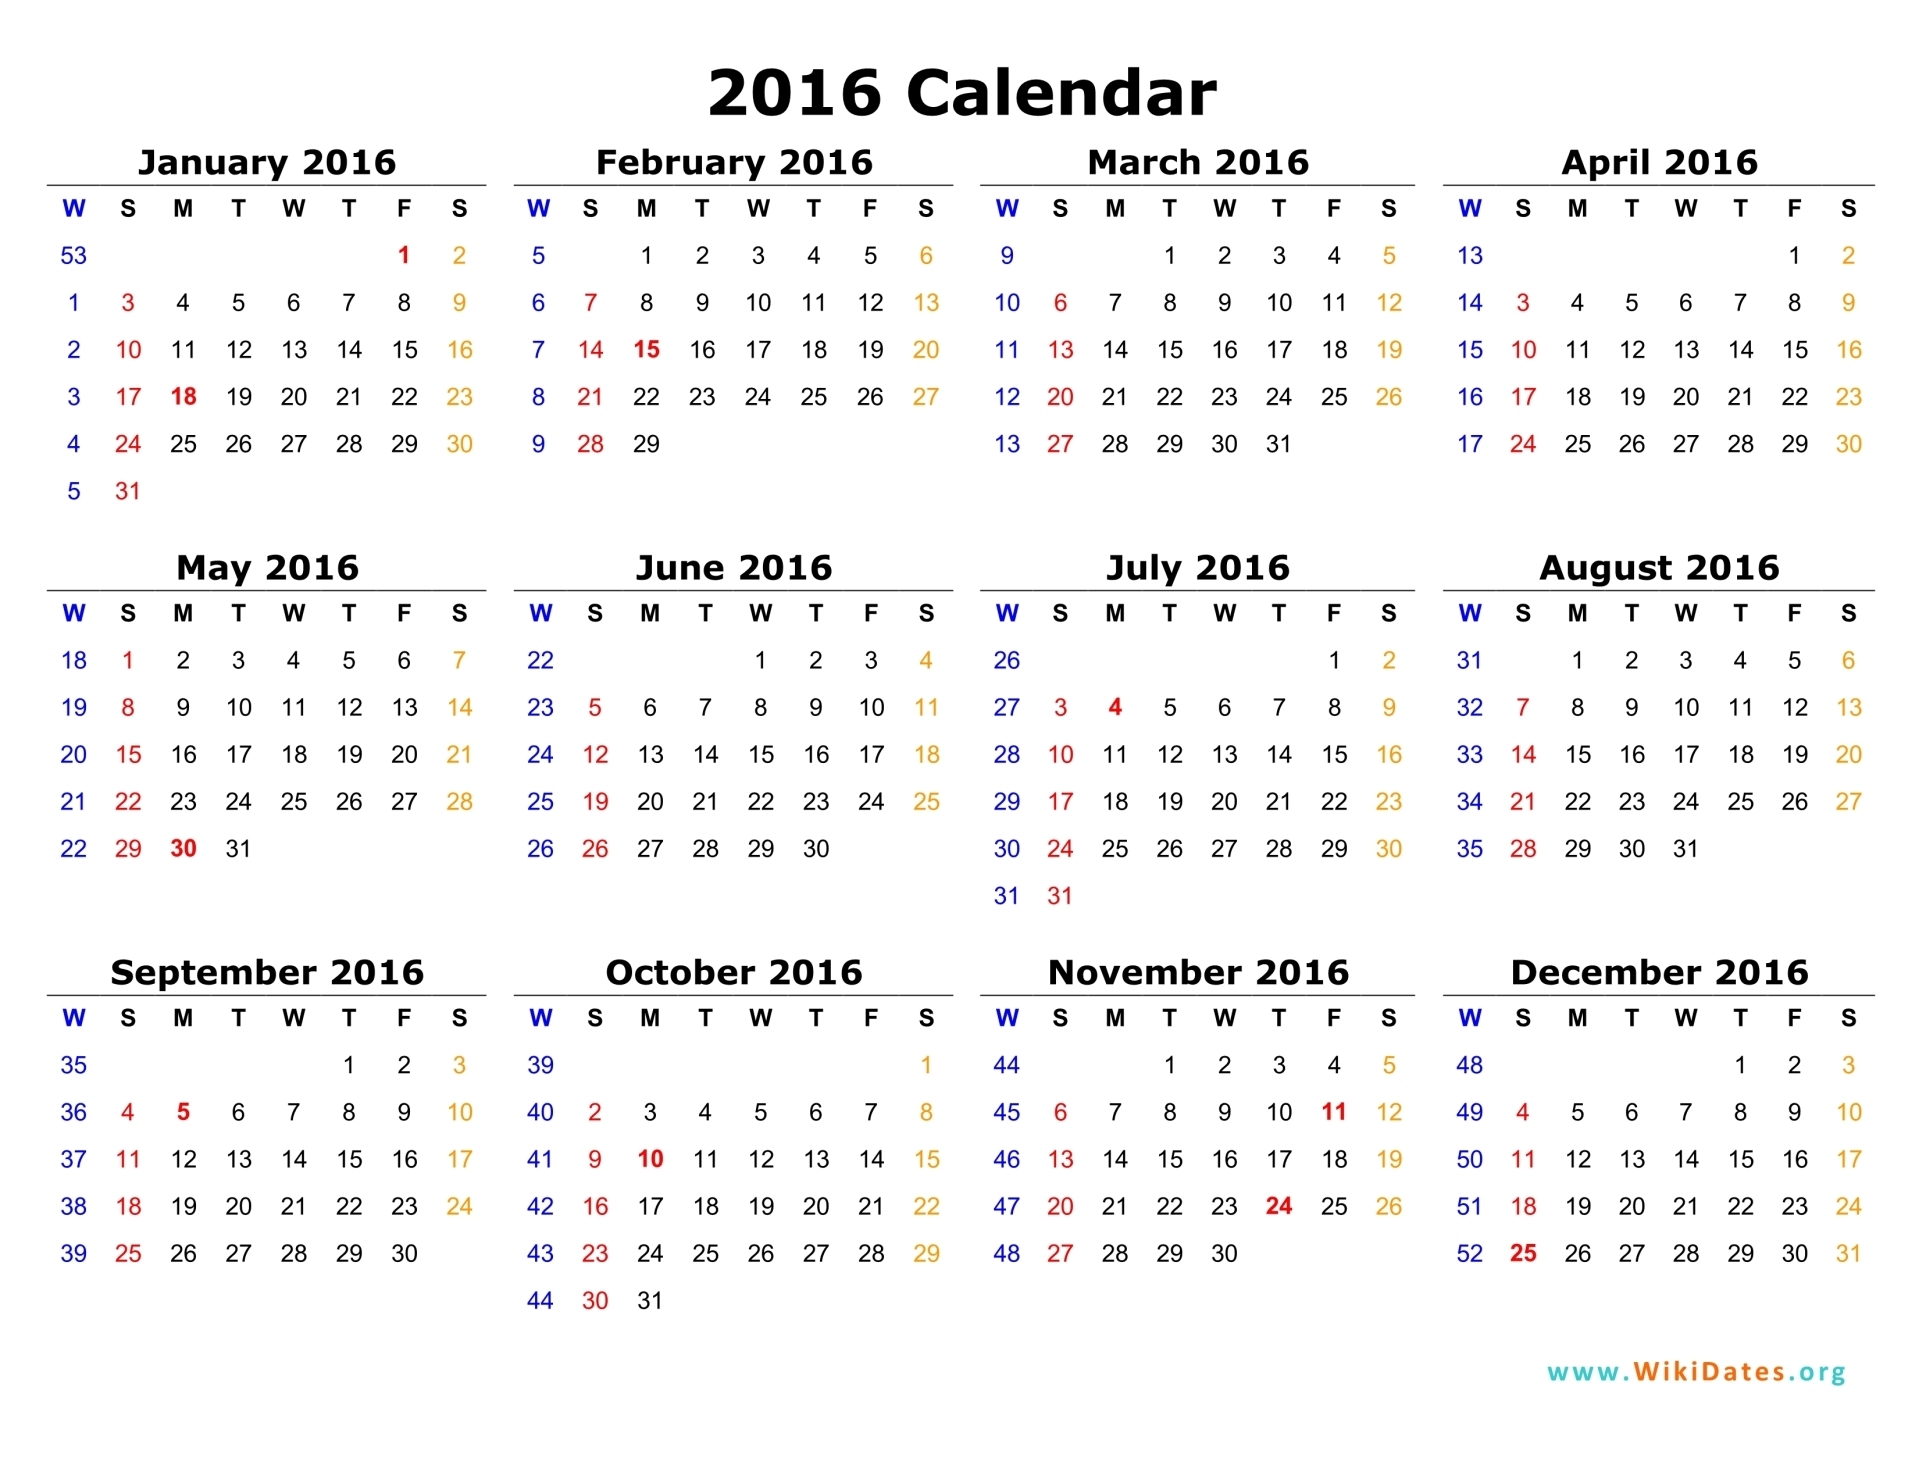 Pretty Printable Calendars For August 2016